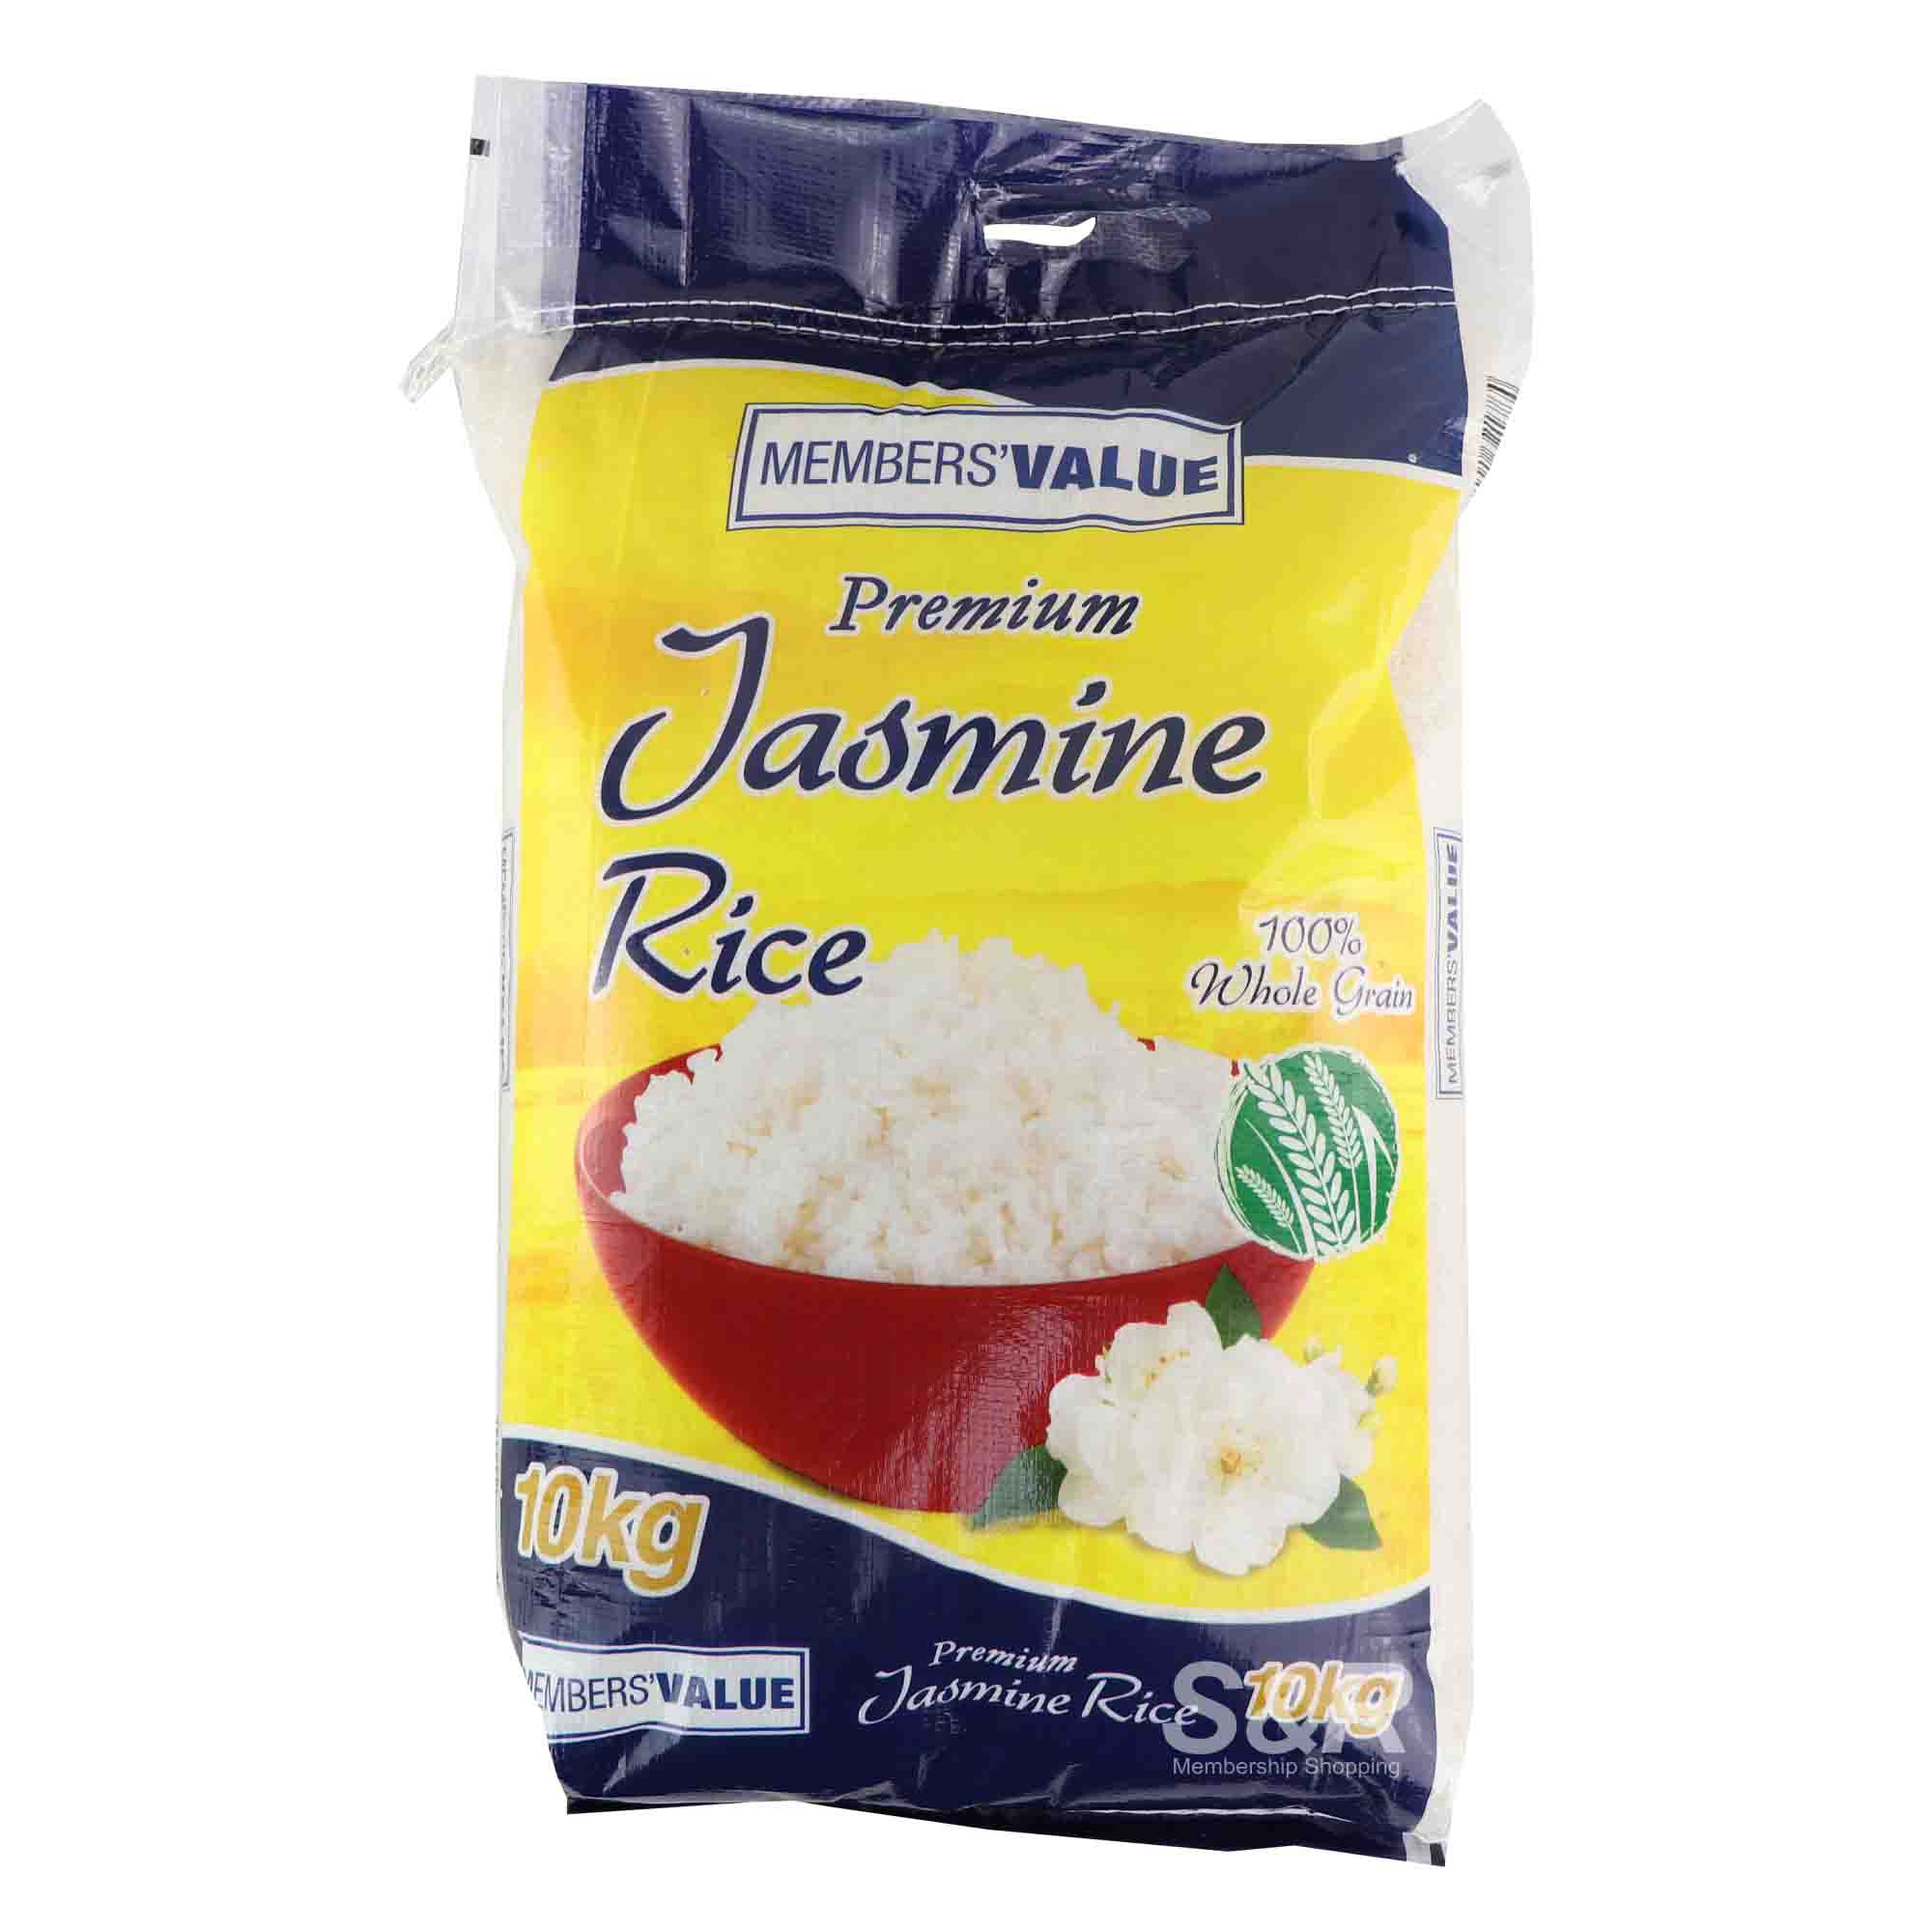 Members' Value  Jasmine Premium 100% Whole Grain Rice 10kg